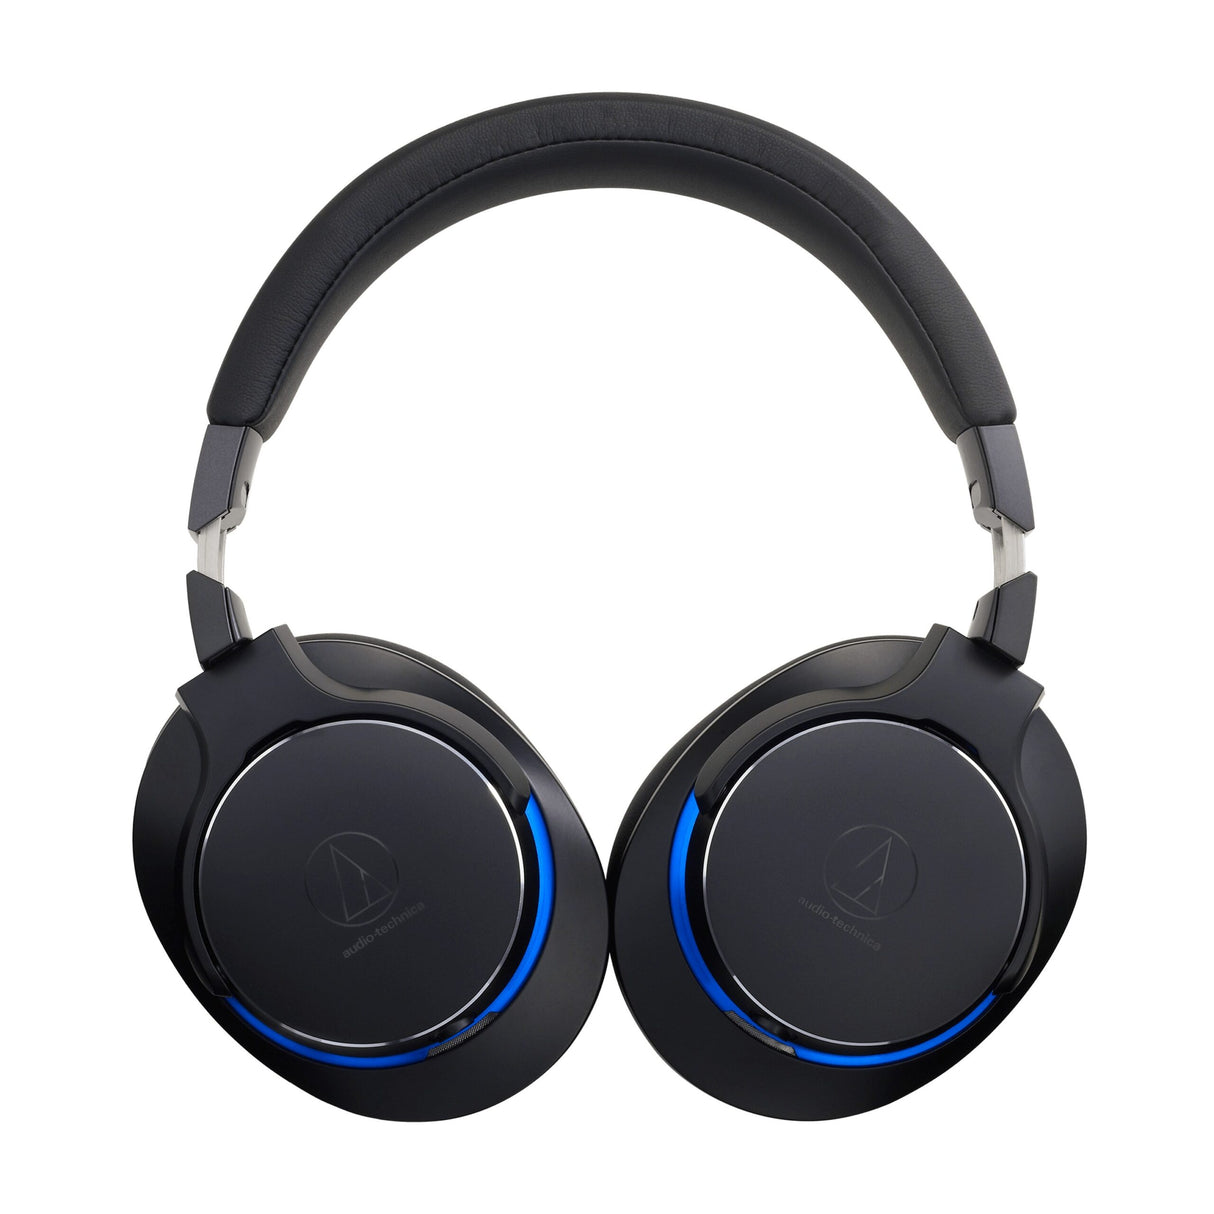 Audio-Technica ATH-MSR7bBK Over-Ear High-Resolution Headphones, Black